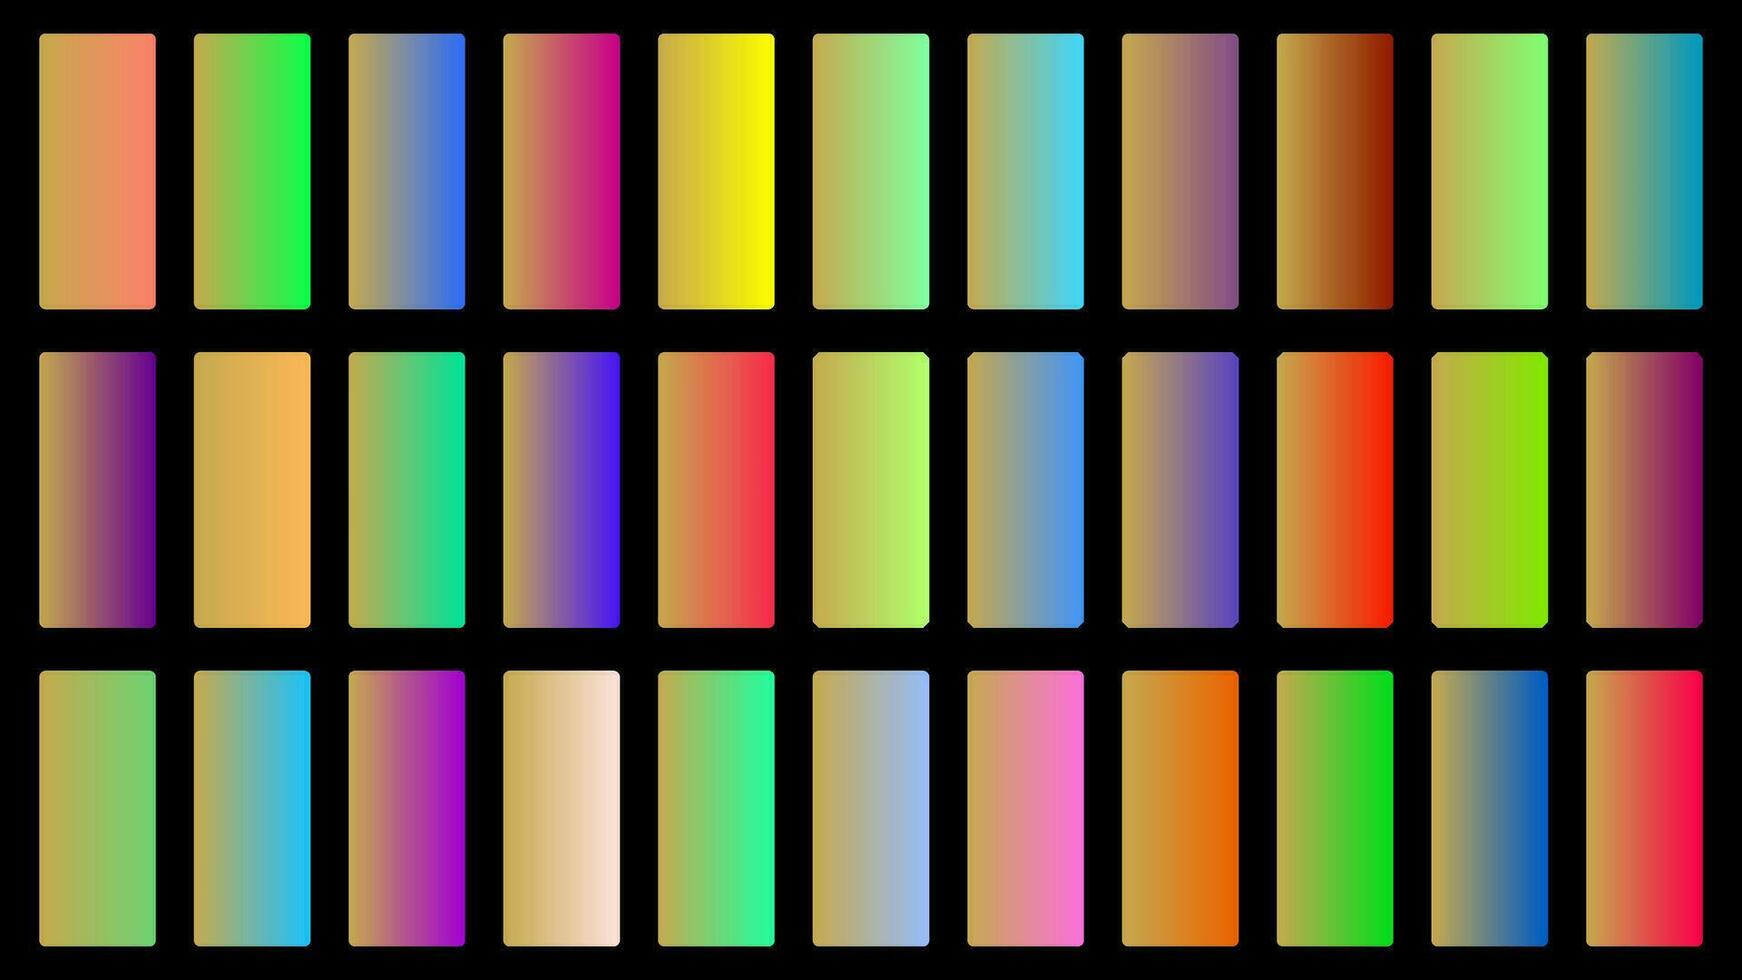 colorida castanho cor sombra linear gradiente paleta amostras rede kit arredondado retângulos modelo conjunto vetor